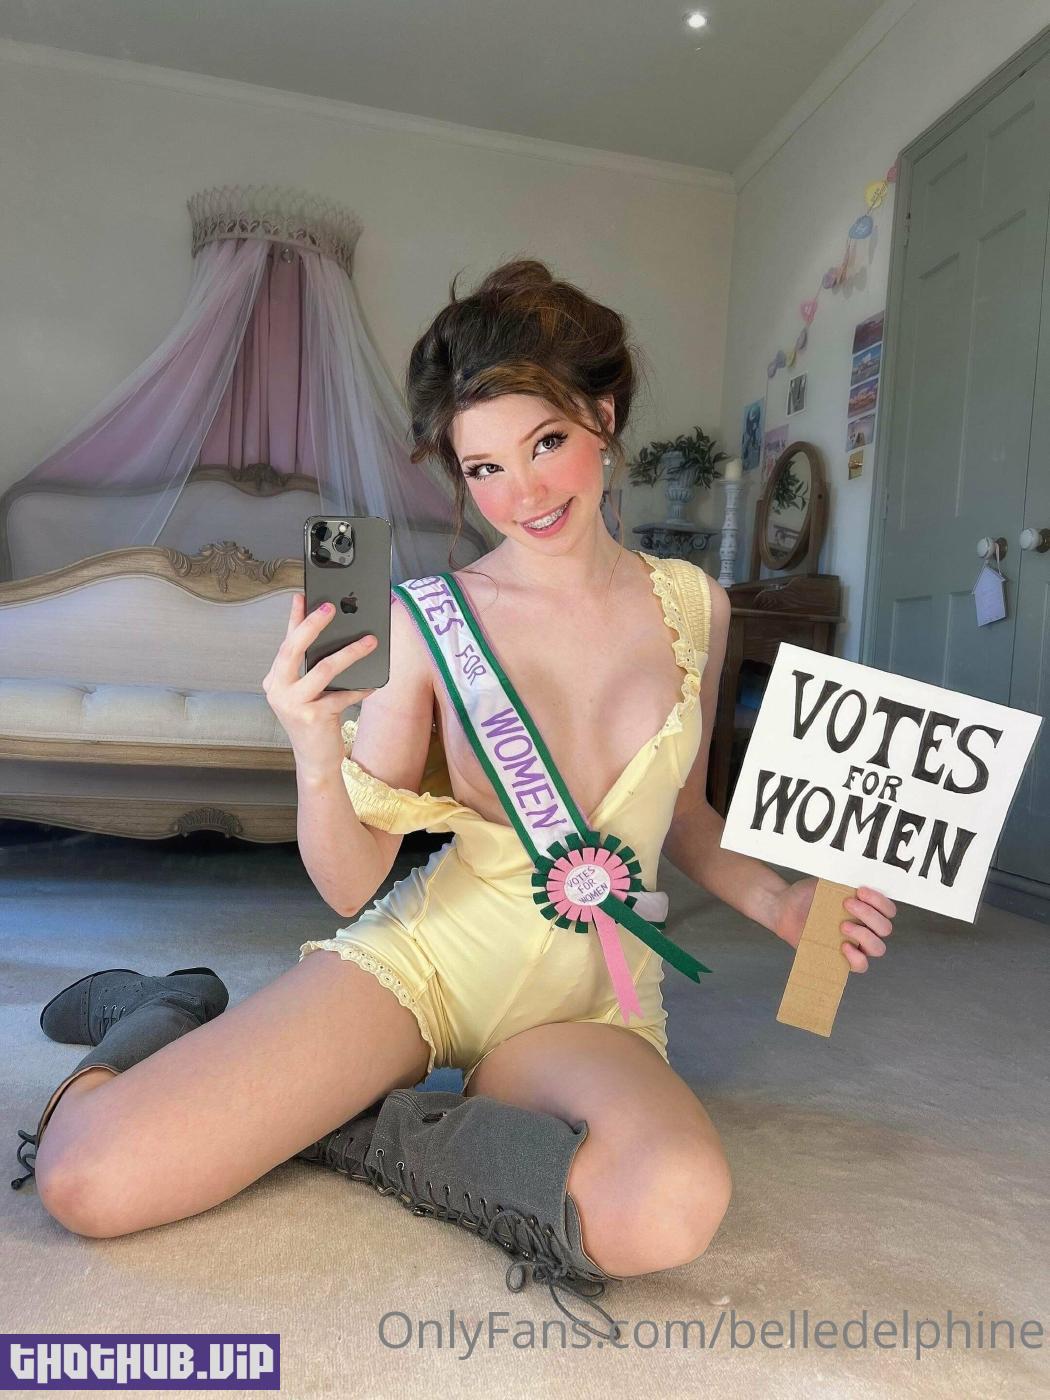 1662745856 164 Belle Delphine Votes For Women Onlyfans Set Leaked